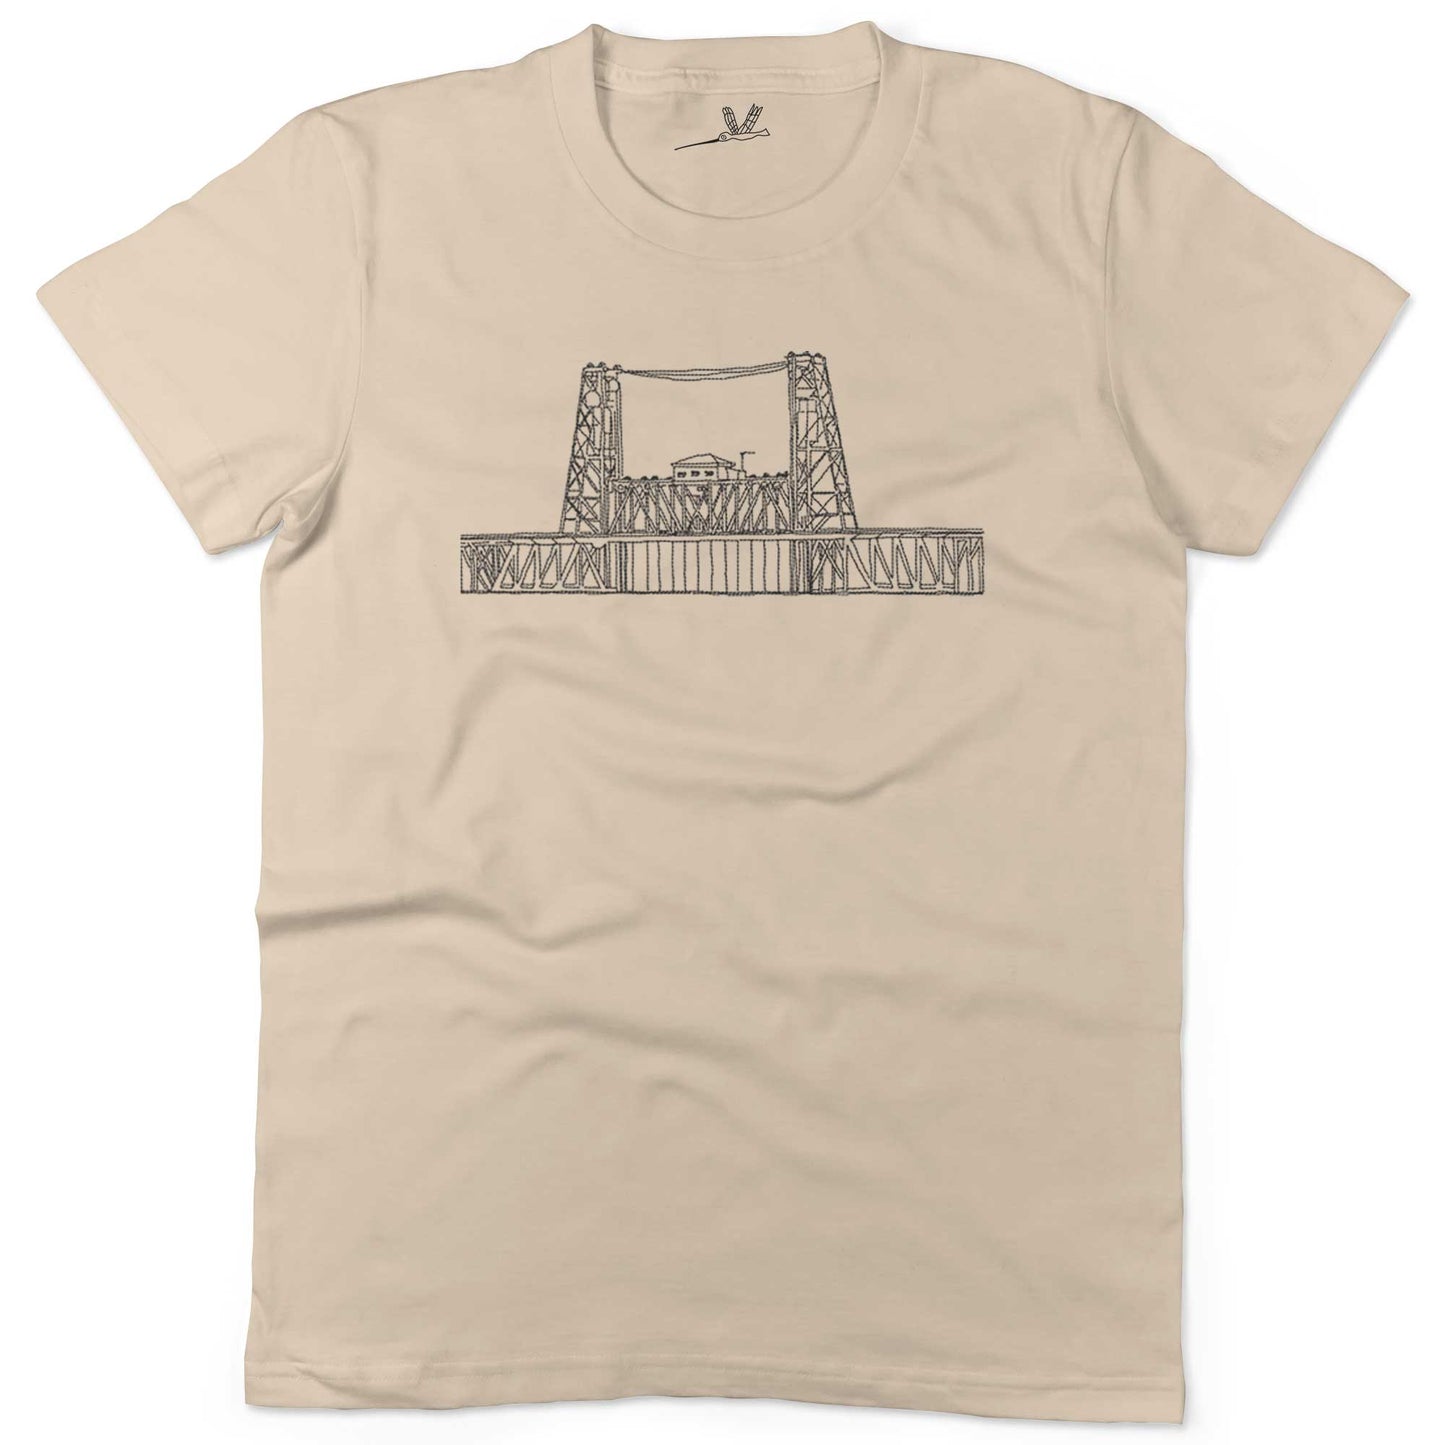 Steel Bridge Unisex Or Women's Cotton T-shirt-Organic Natural-Woman